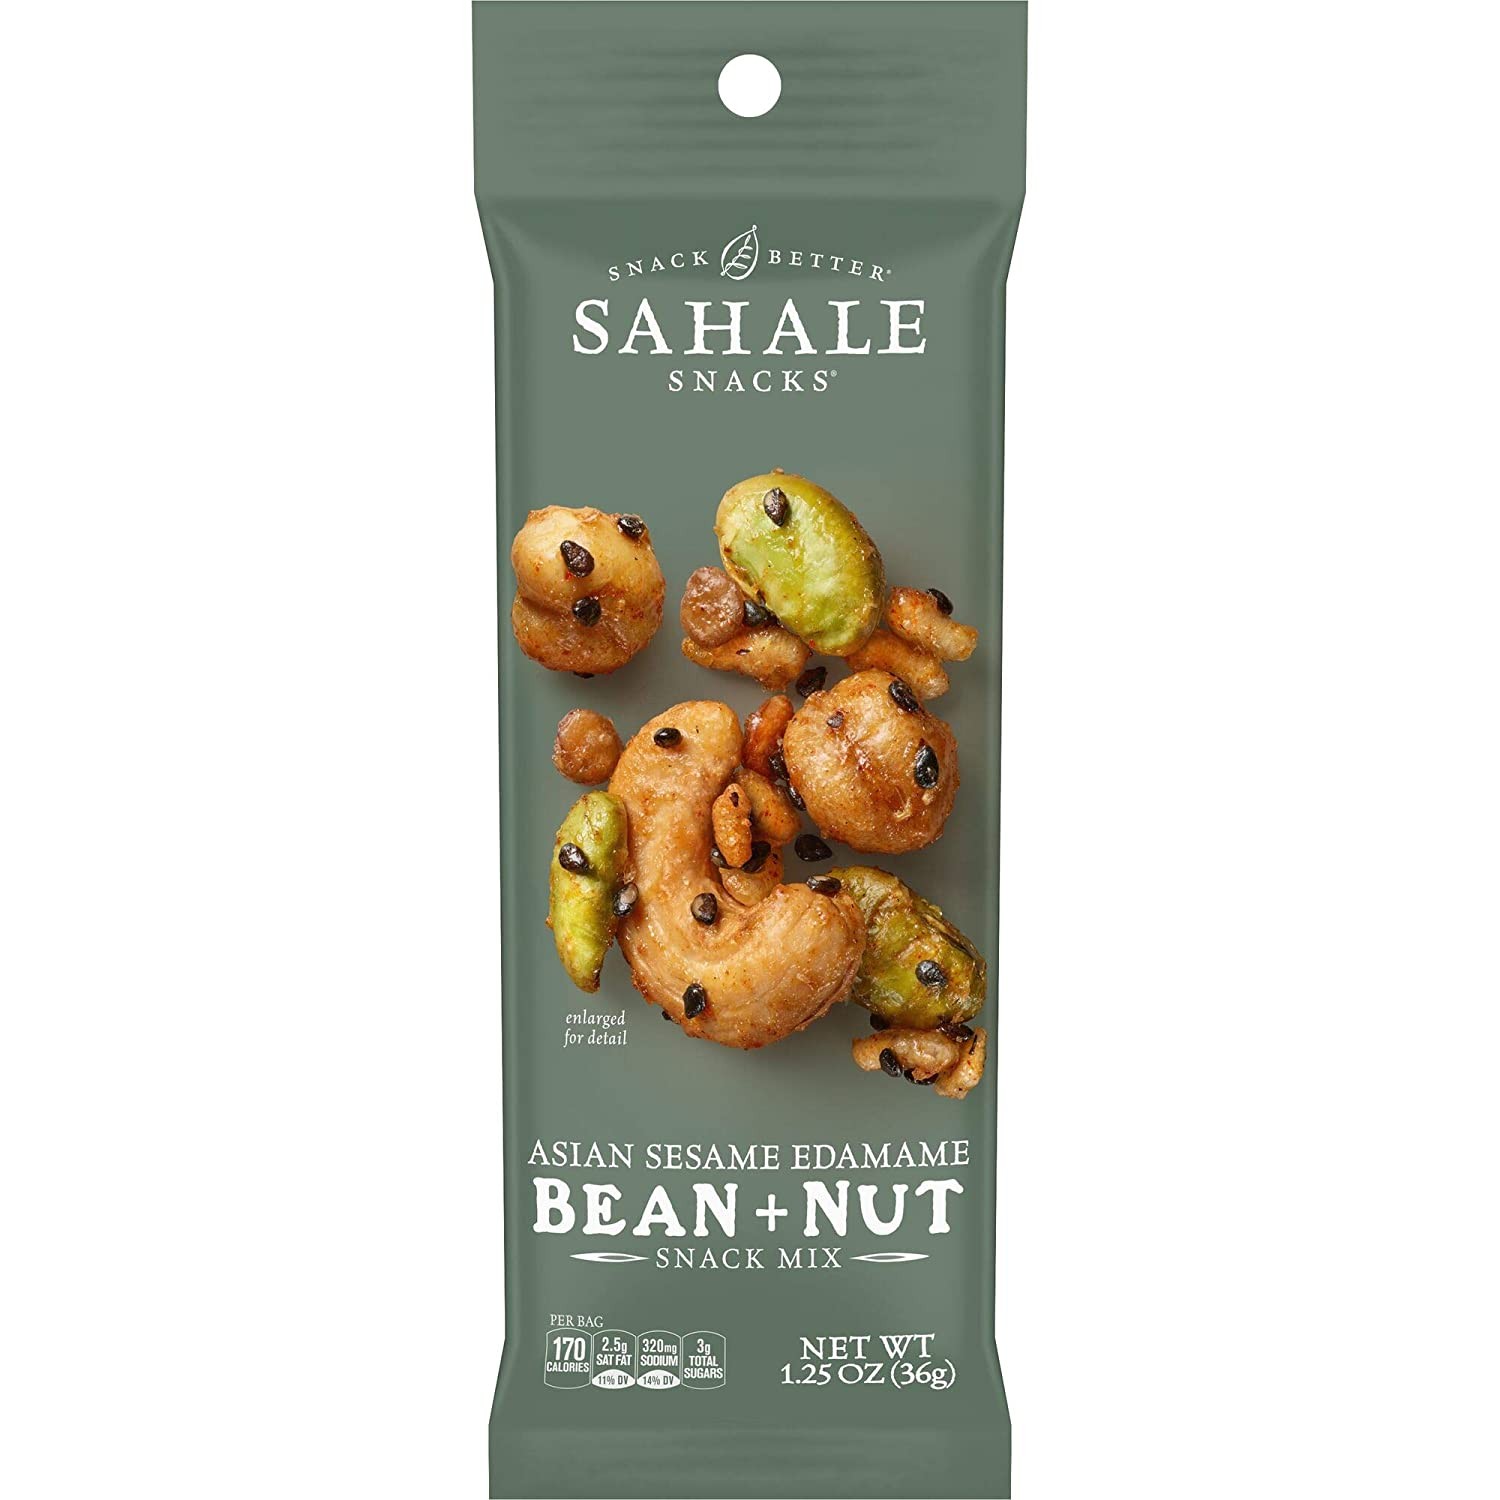 Amazon.com: Sahale Snacks Asian Sesame Edamame Bean + Nut Snack Mix, 1.25 Ounces (Pack of 18) $10.07